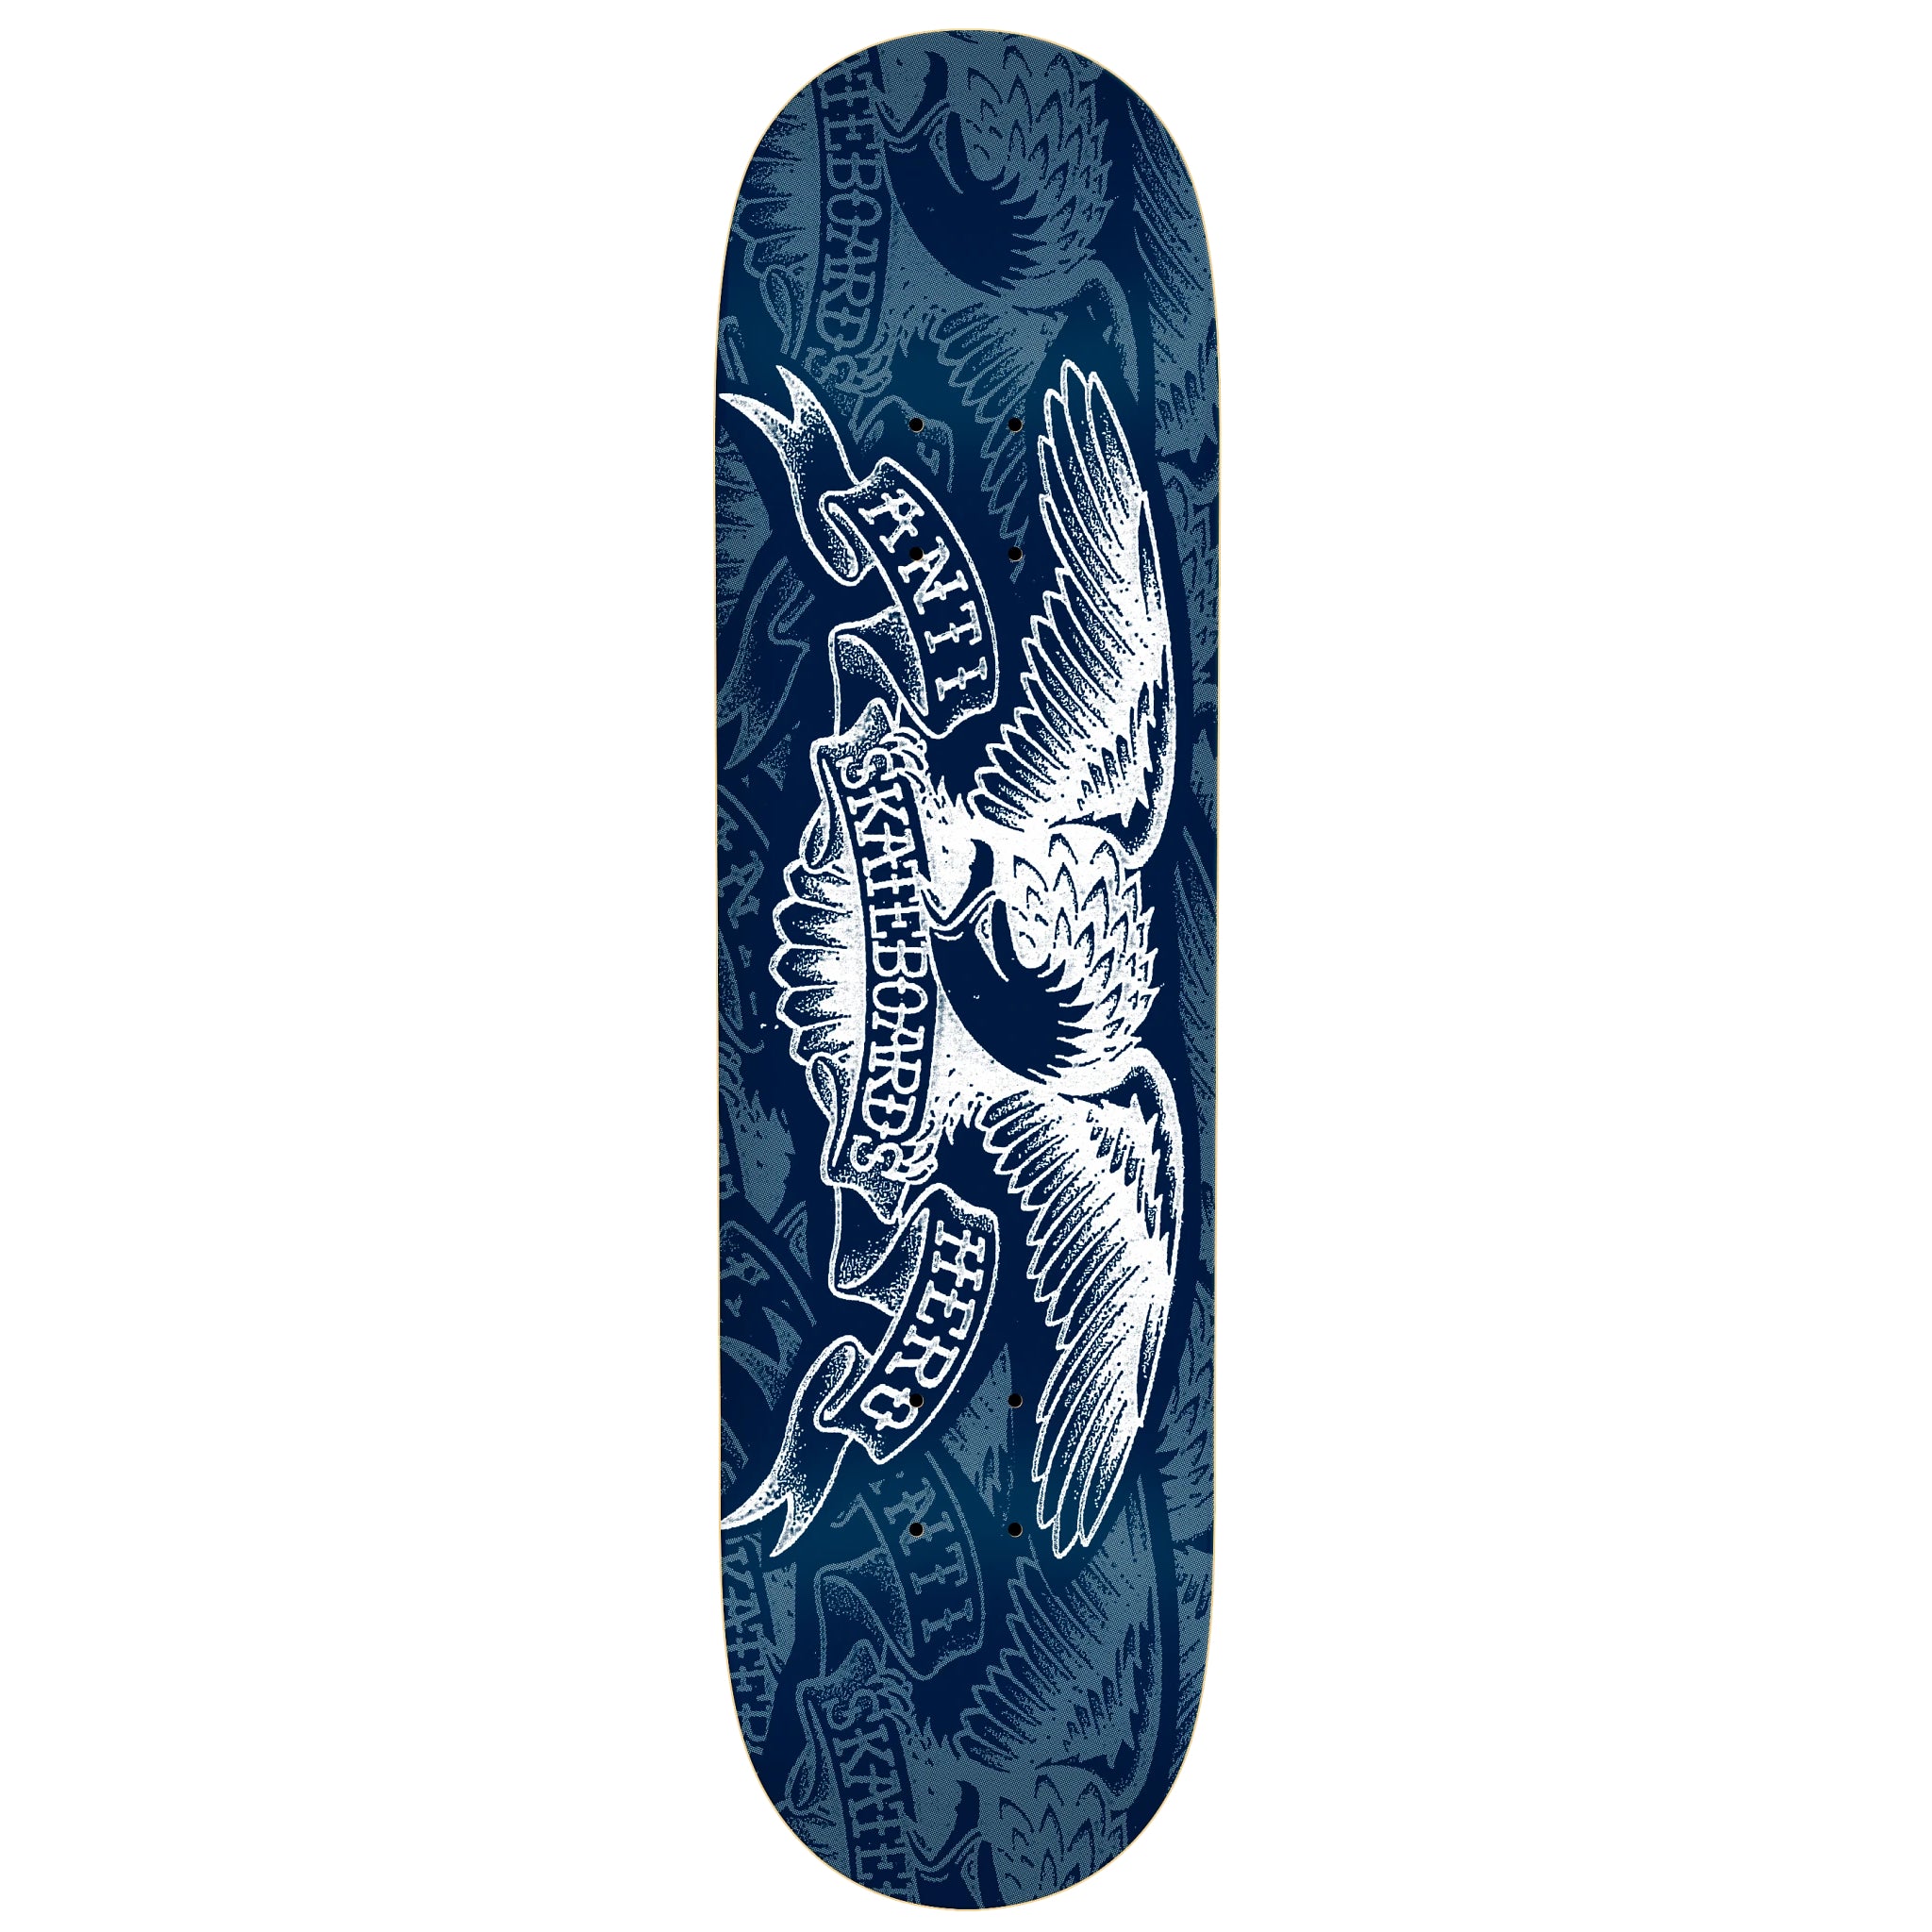 Copier Eagle Antihero skateboard deck